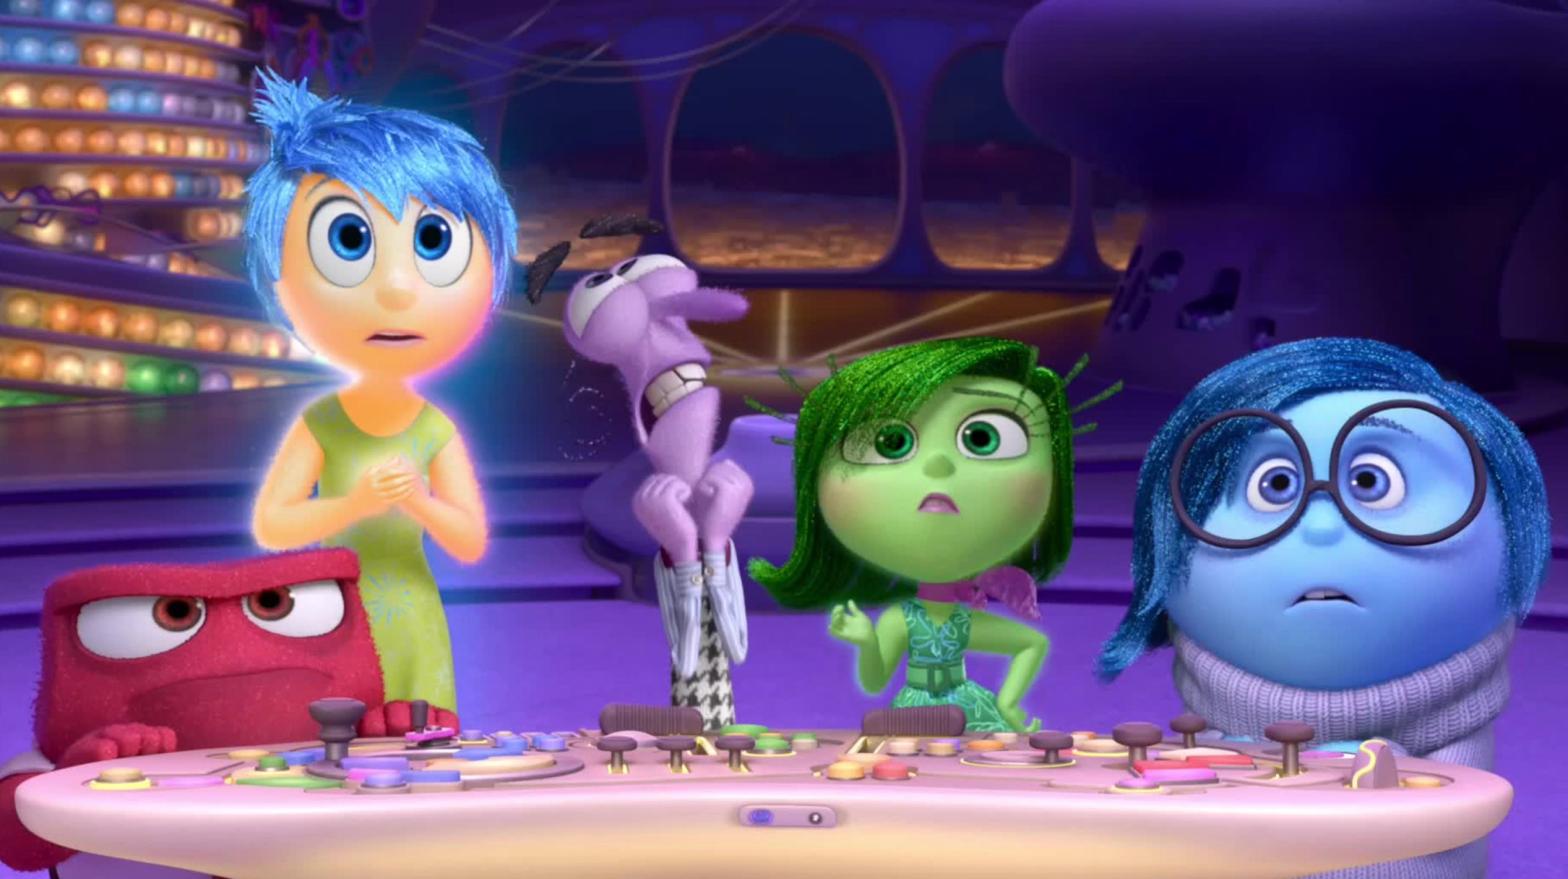 Riley's emotions are returning for Inside Out 2. (Image: Disney/Pixar)